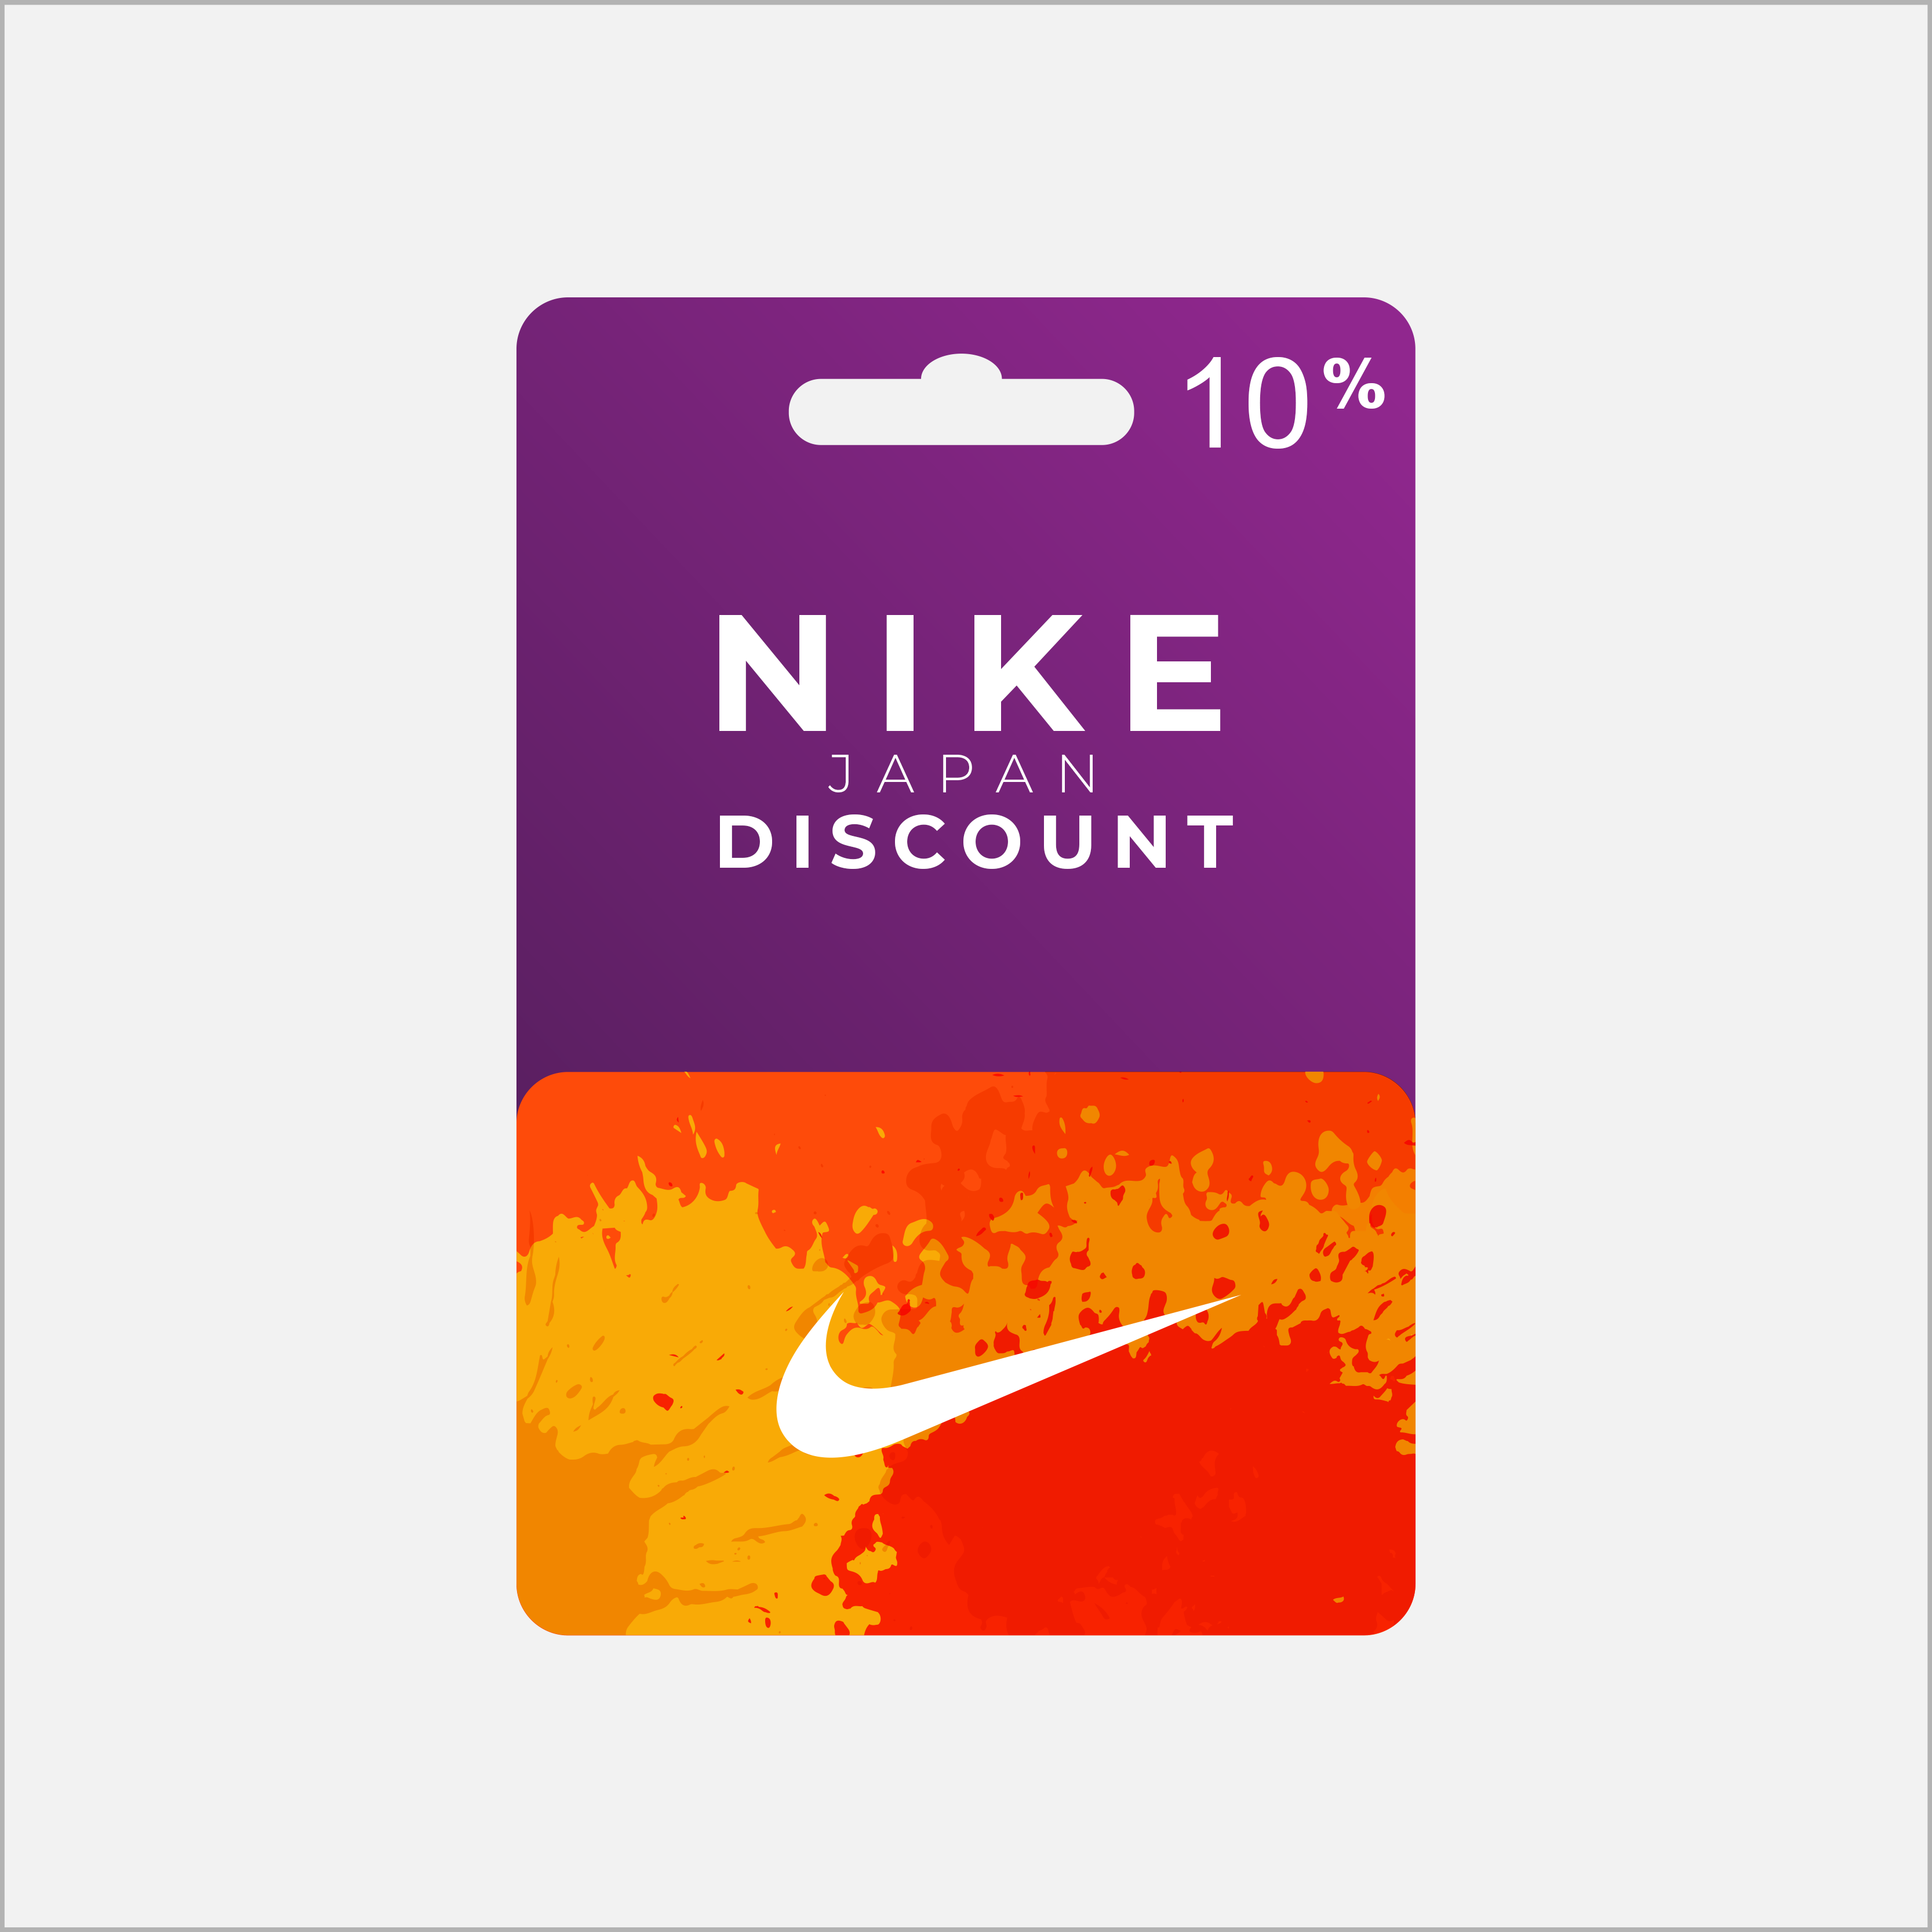 nike discount codes that work